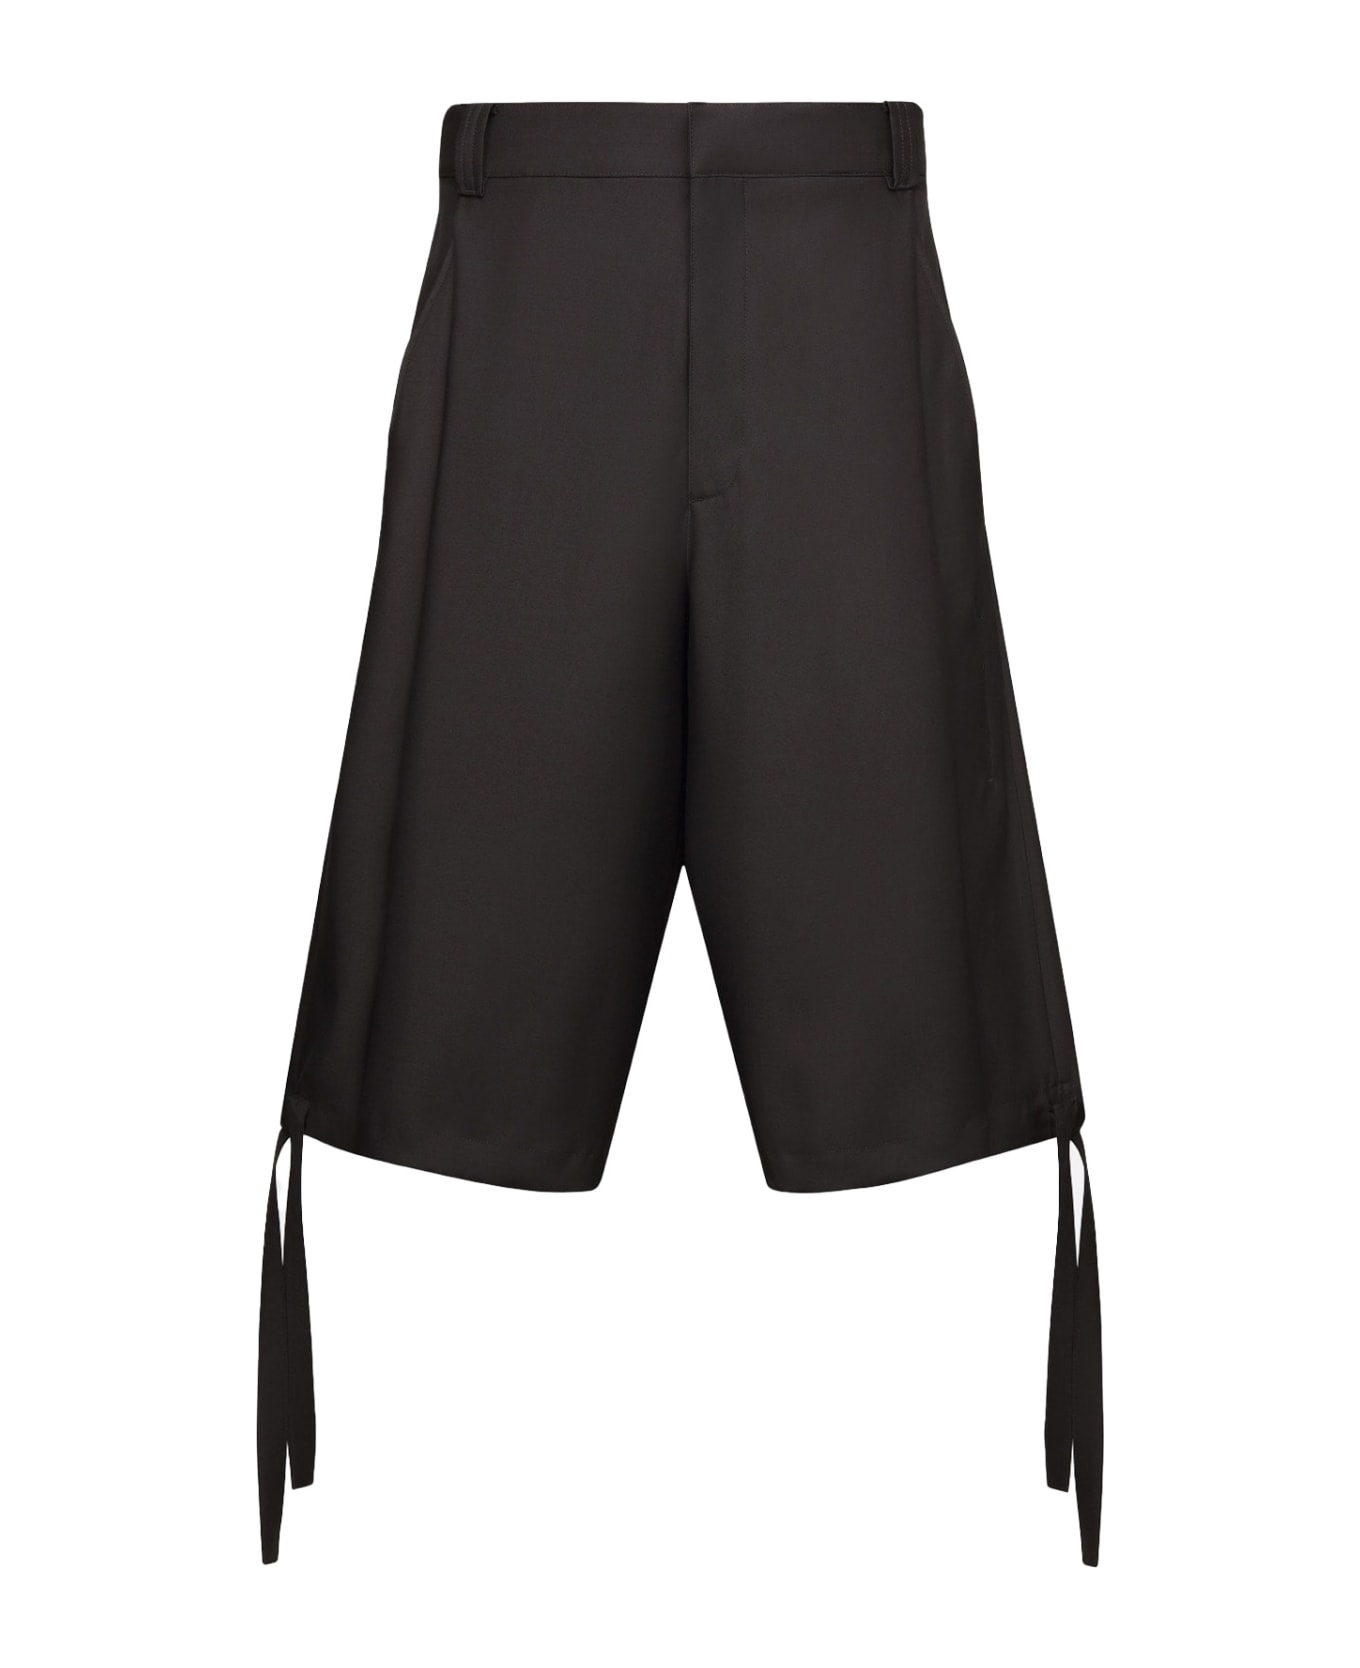 Dior Homme Shorts - BLACK